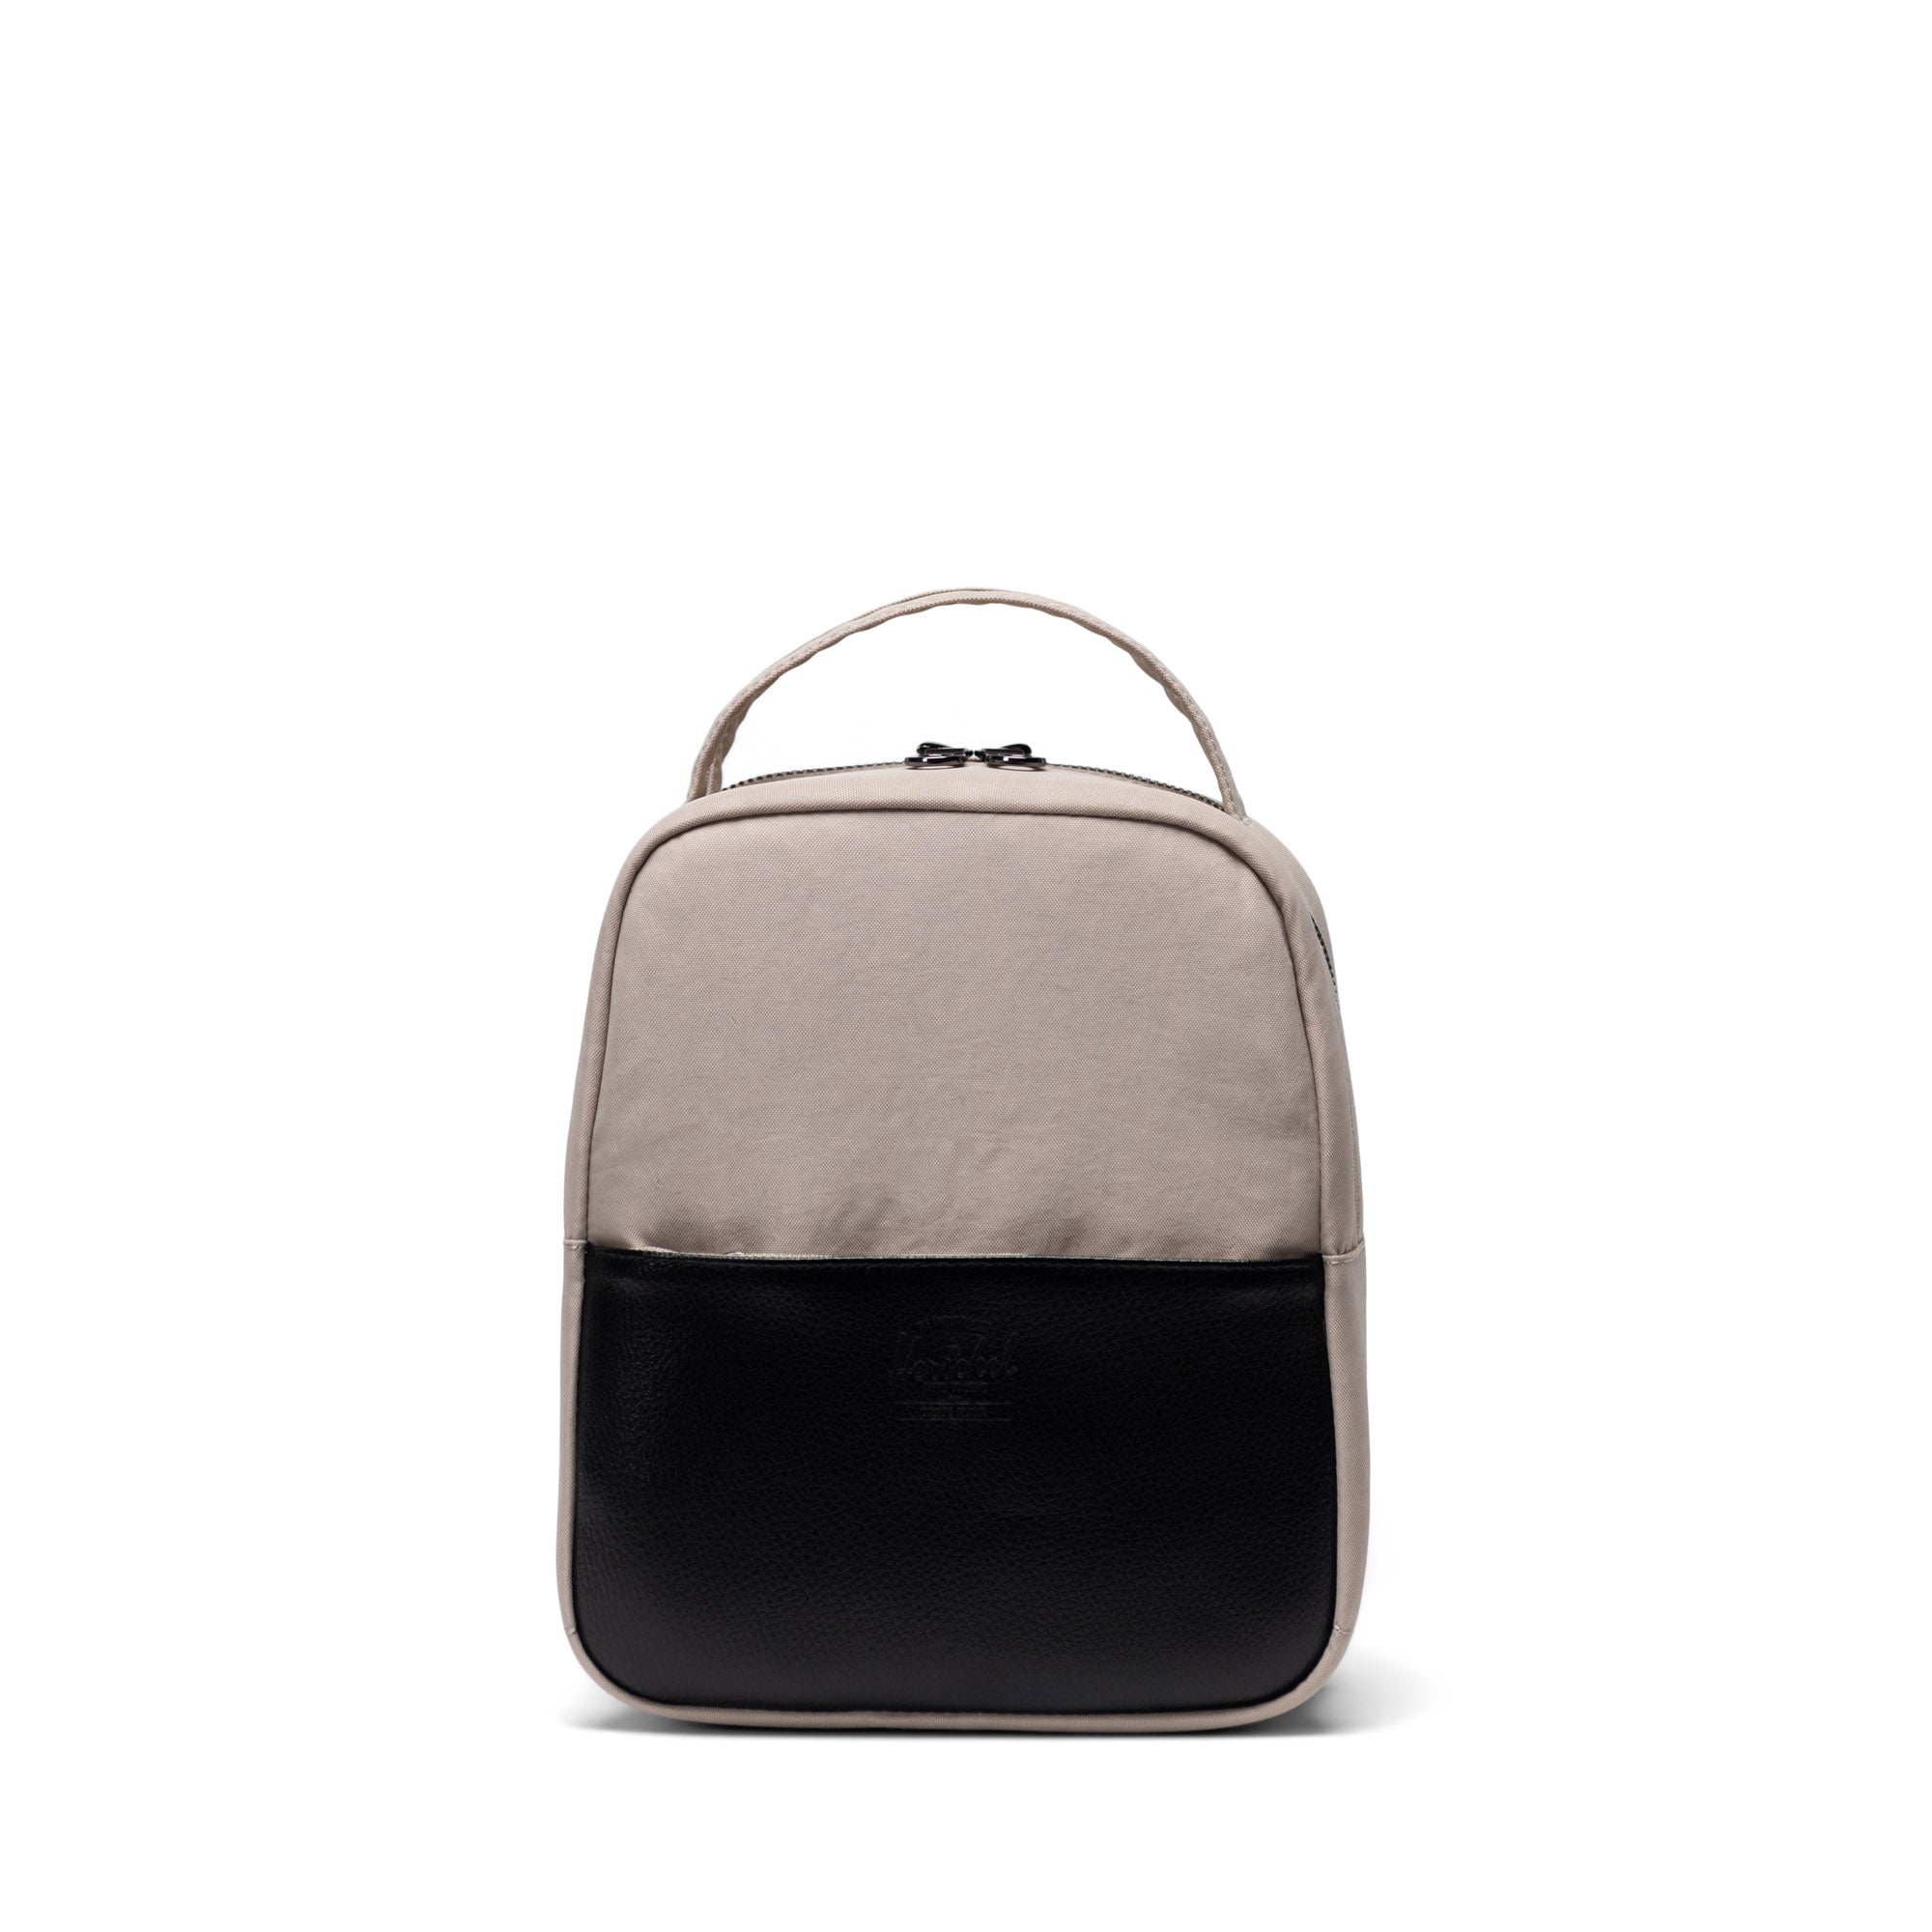 Orion Mini Backpack